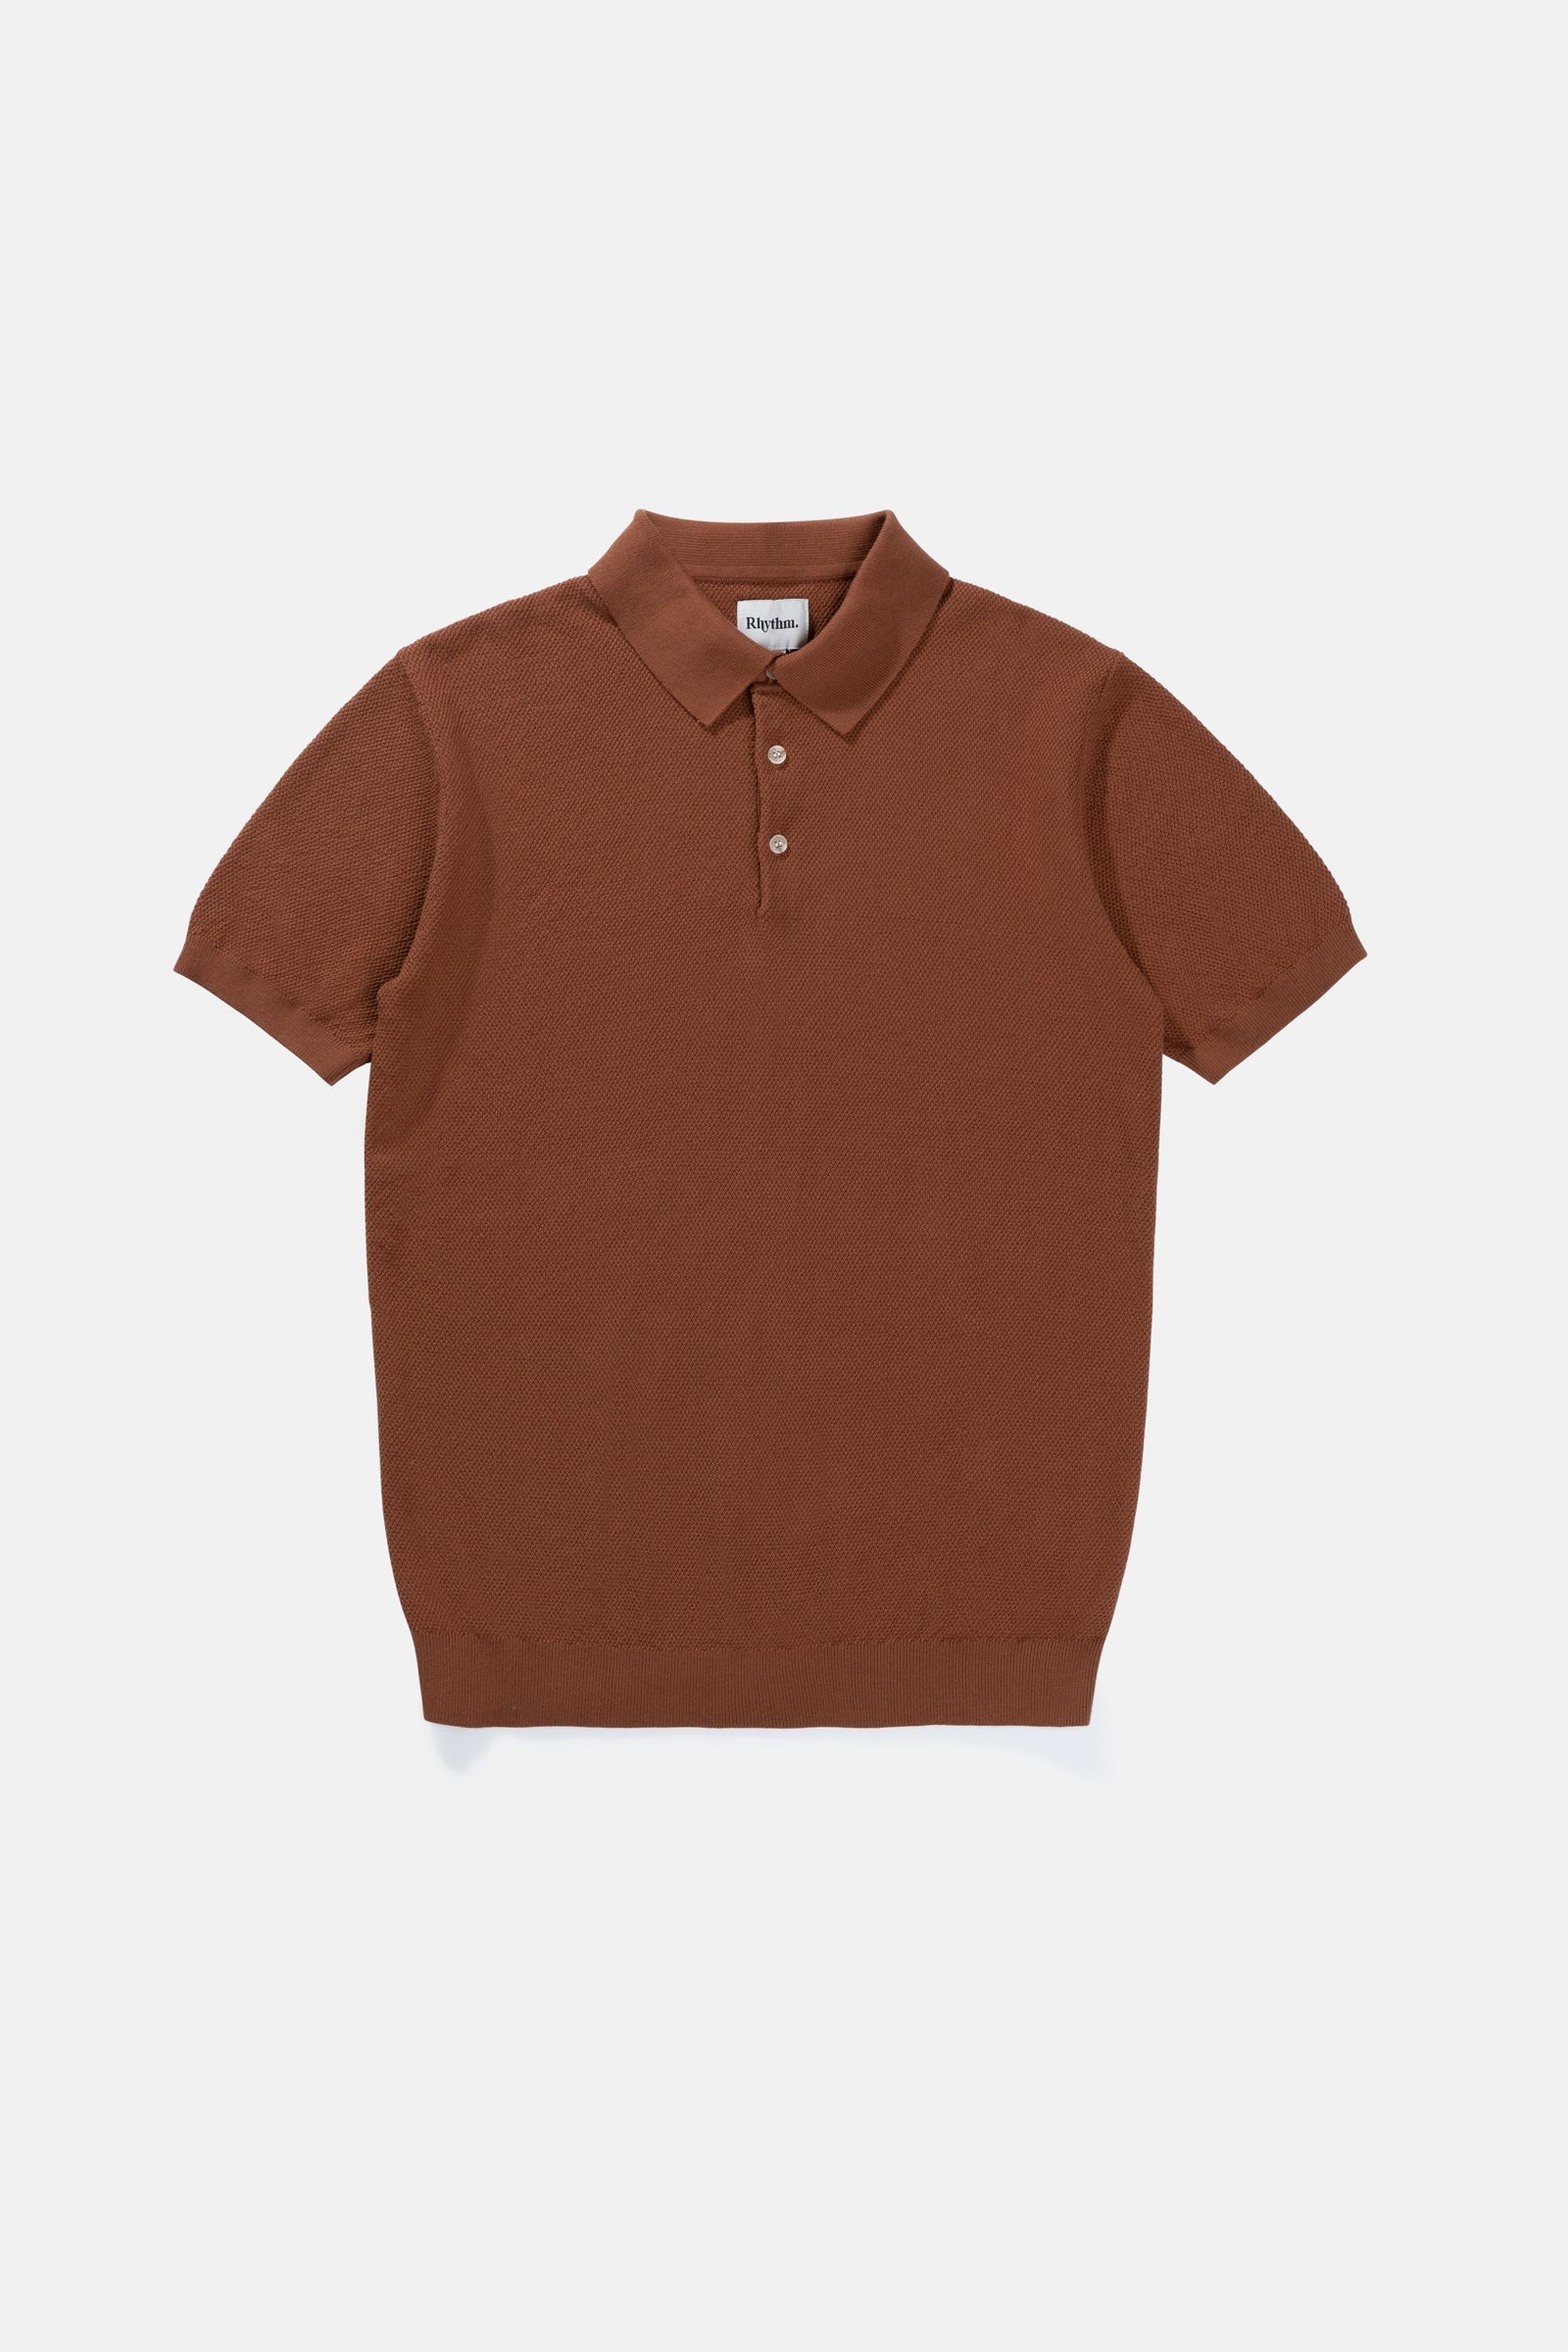 Cotton Knit S/s Polo Shirt